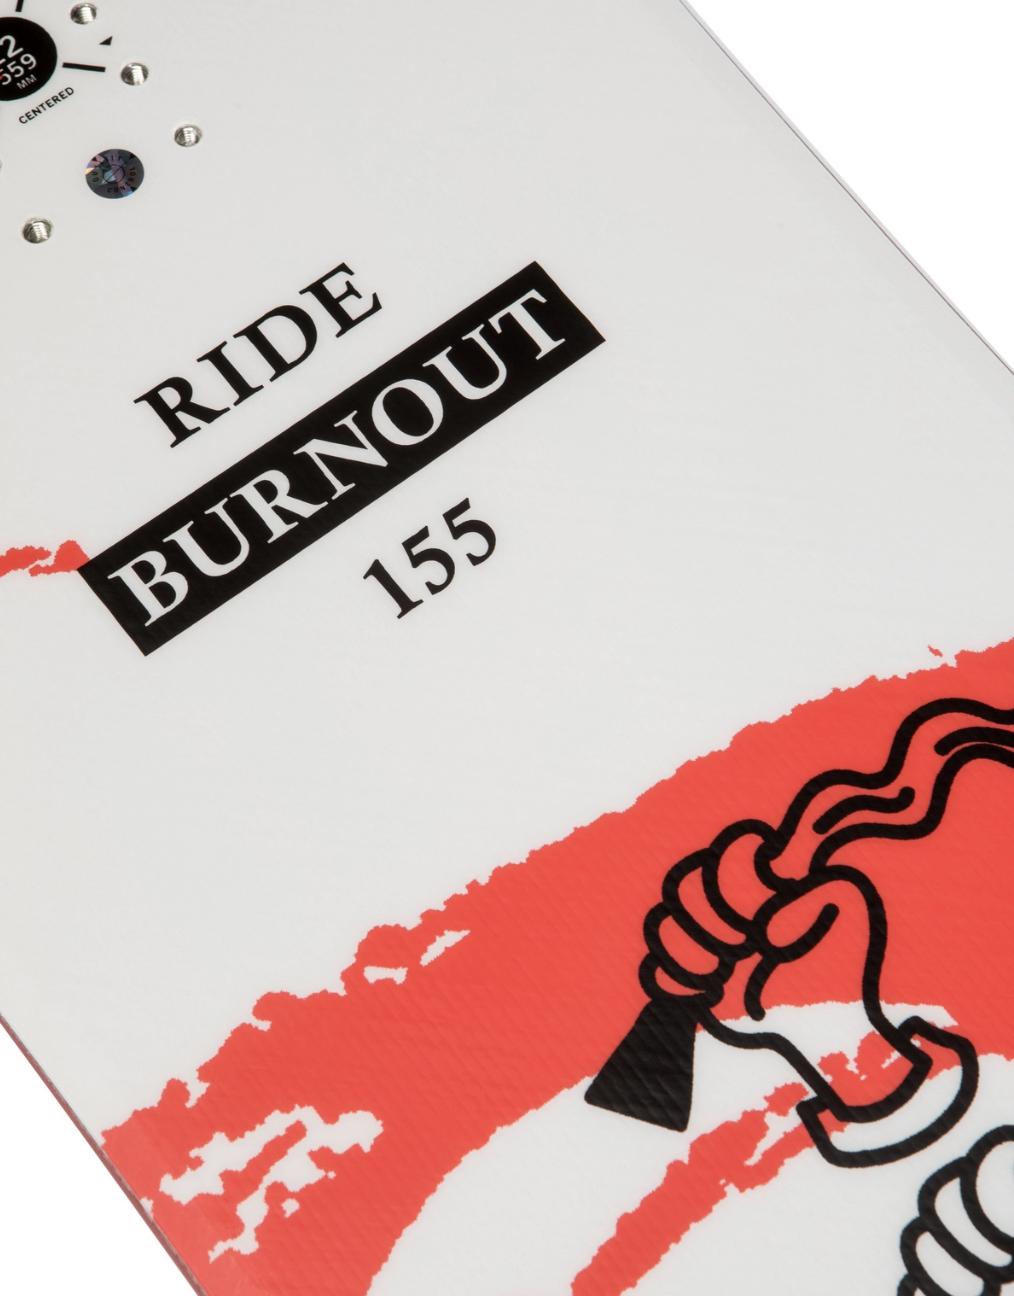 Ride Burnout Snowboard 2020